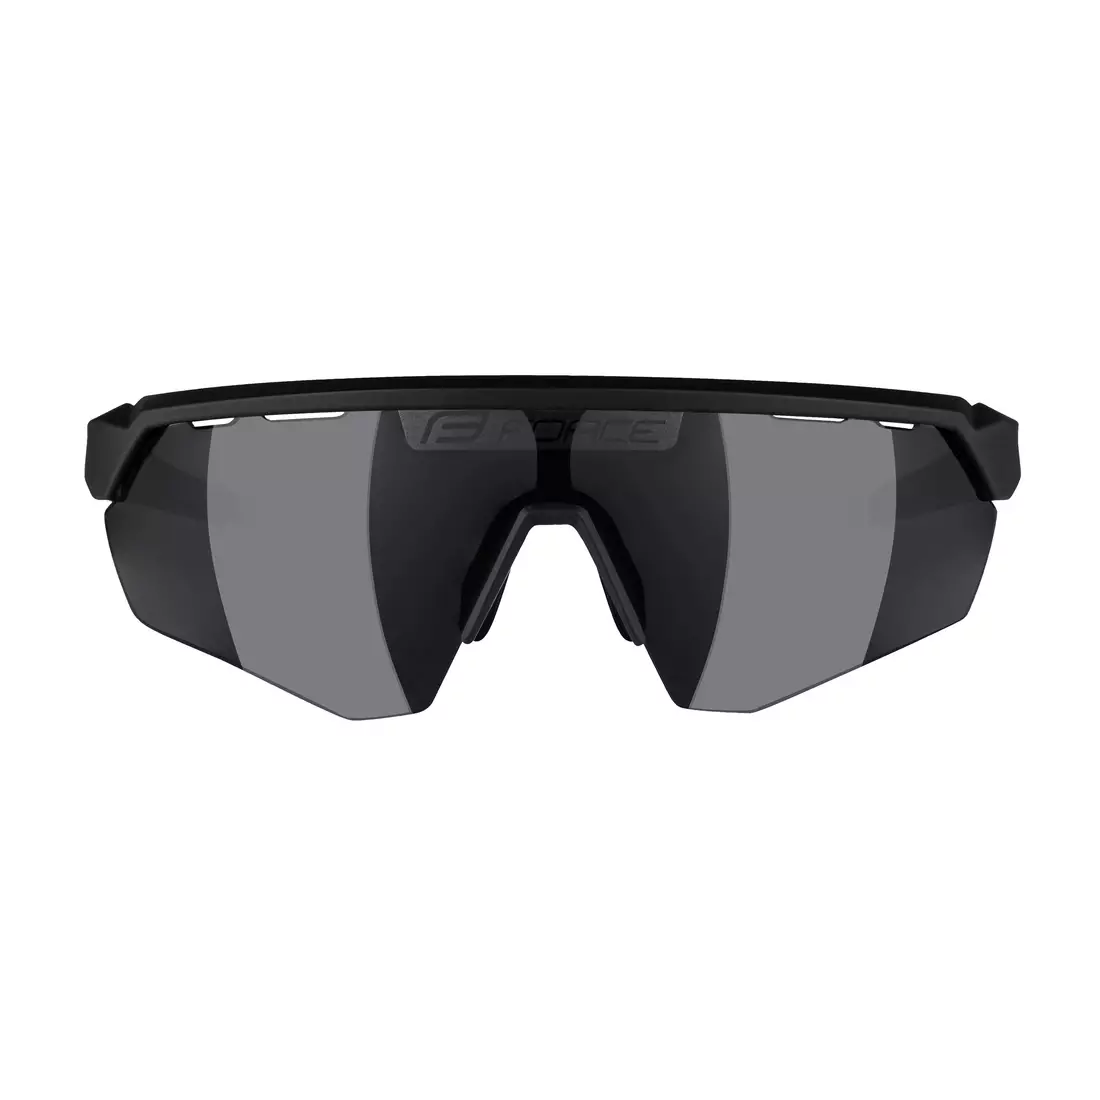 FORCE sunglasses ENIGMA black/grey 91160